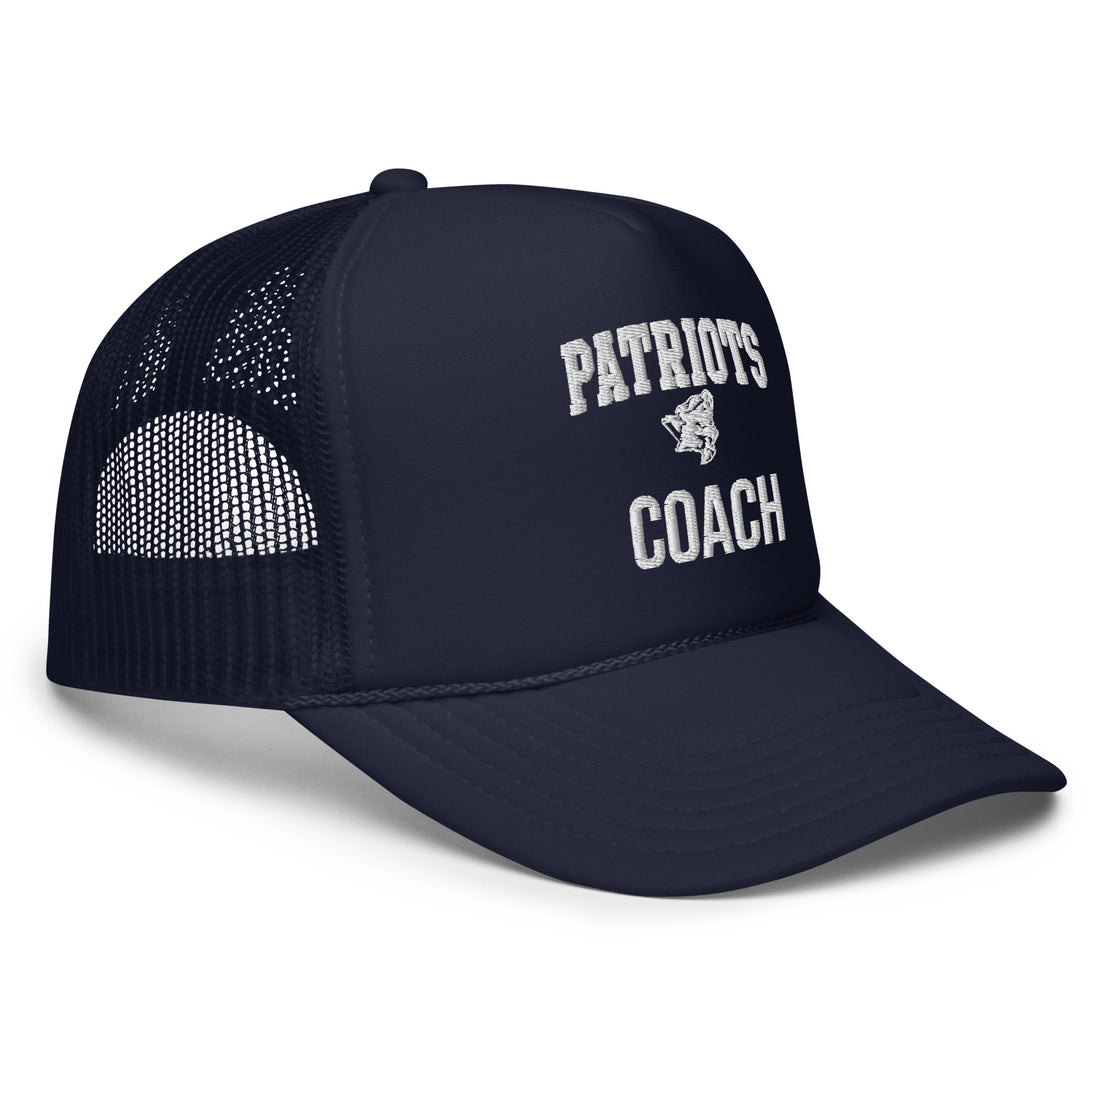 Coach  trucker hat